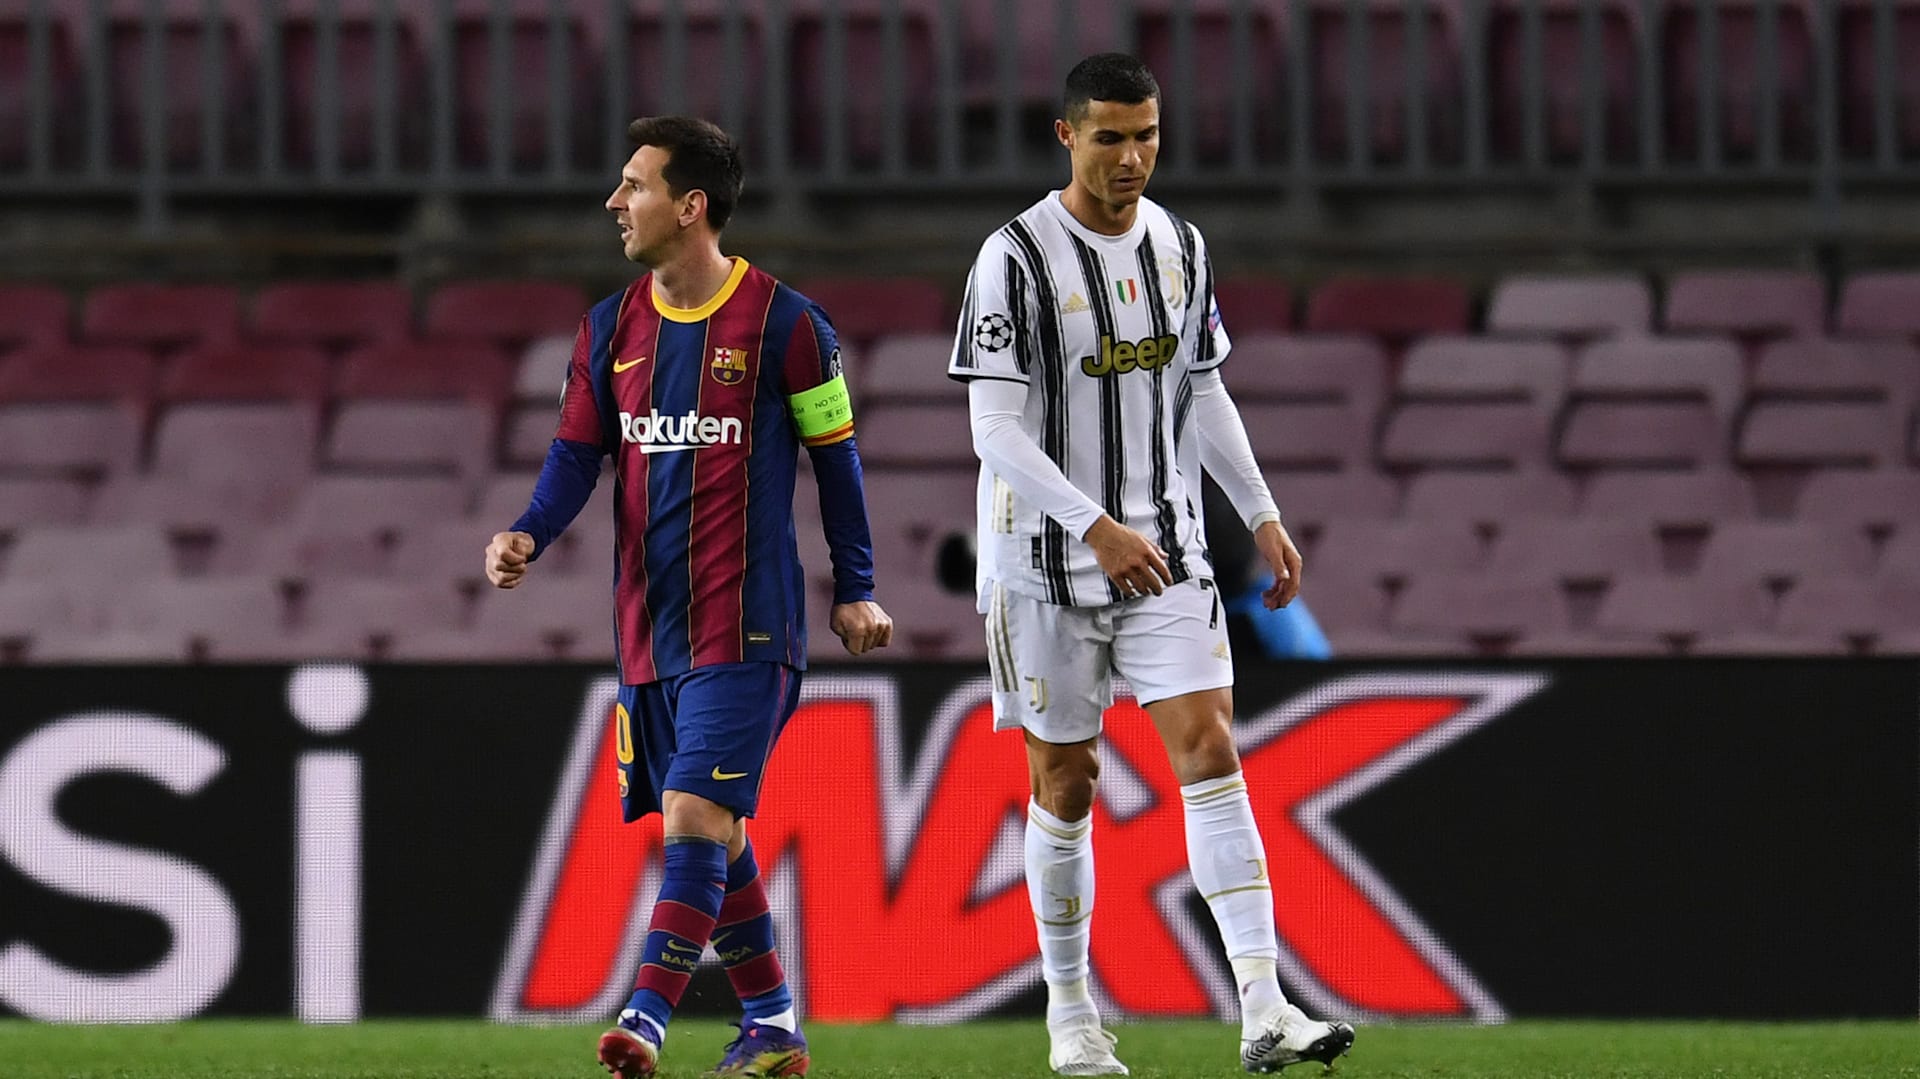 Leo Messi and Cristiano Ronaldo come face to face